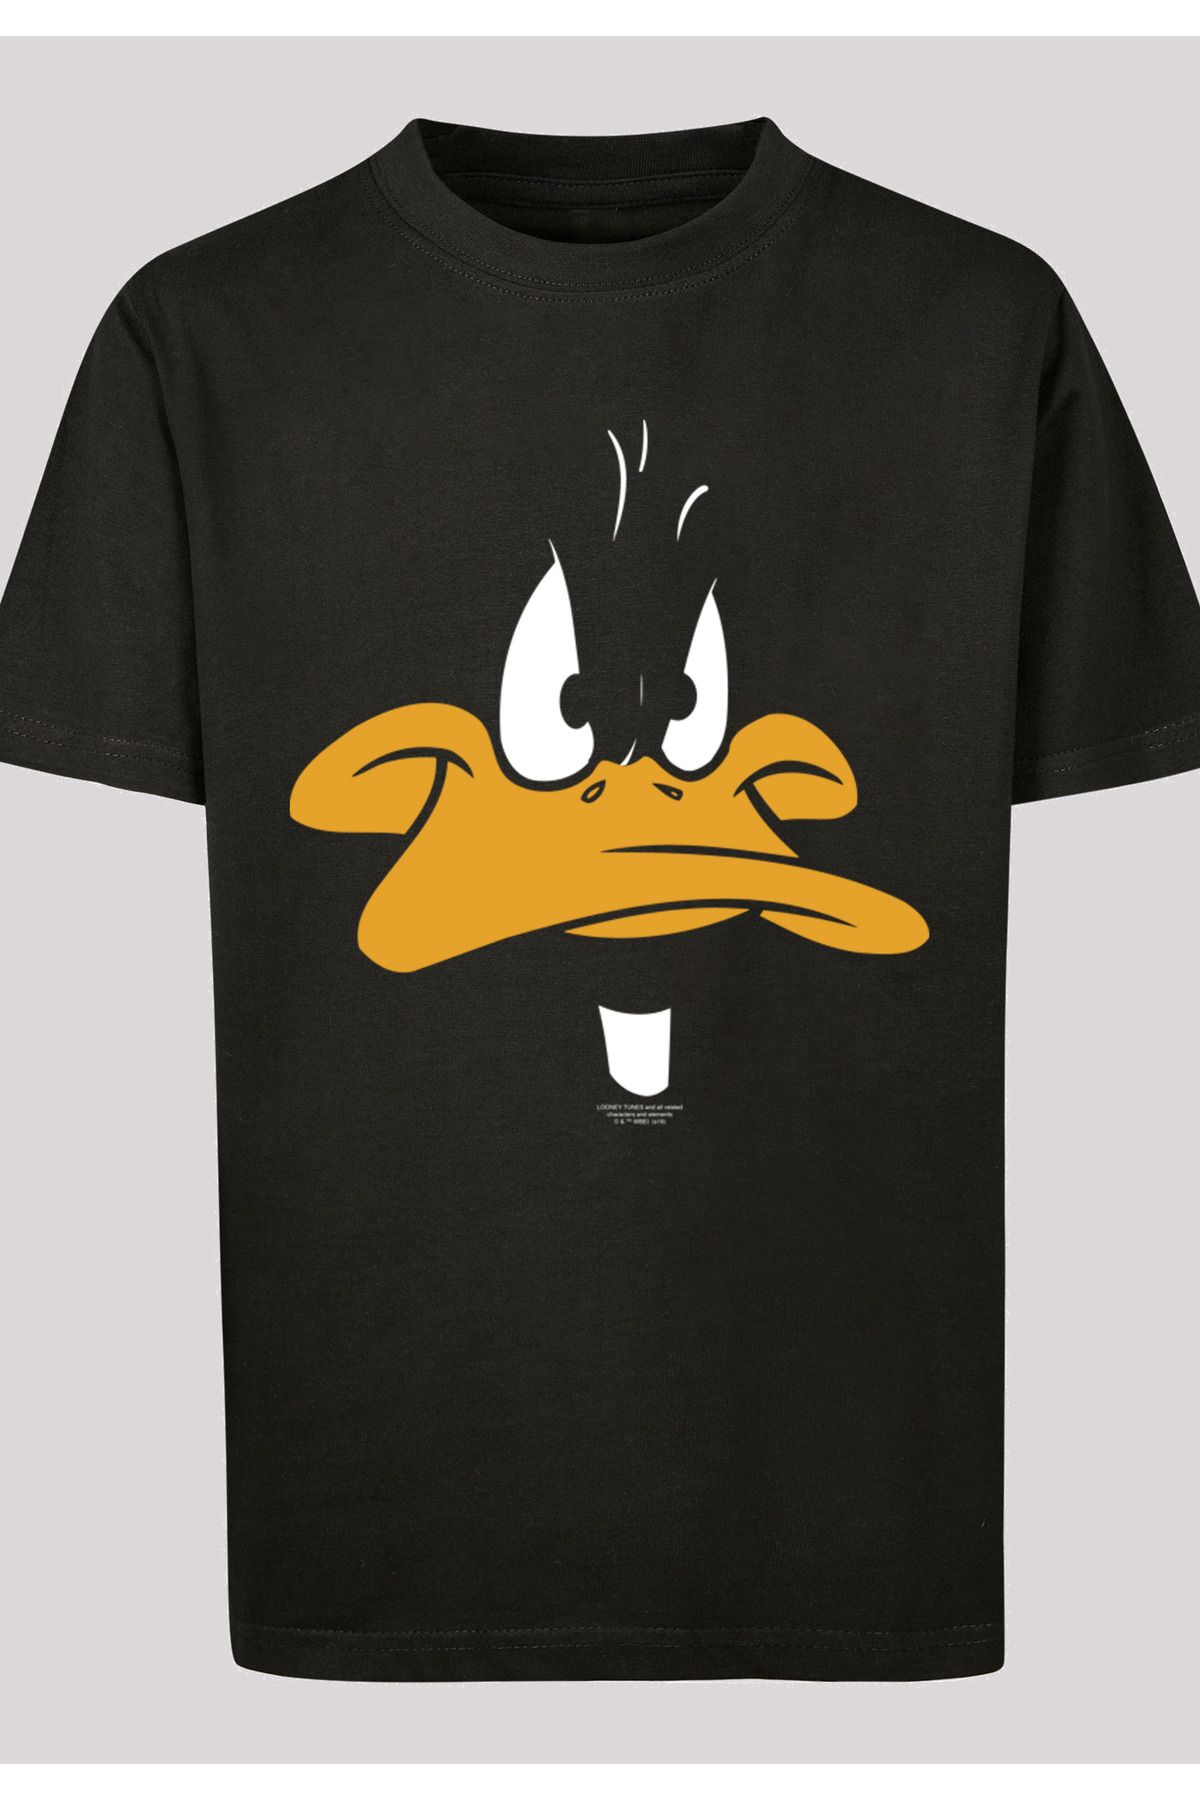 -BLK Duck Kids Looney Big F4NT4STIC Kinder mit Daffy Tunes Face T- Basic Trendyol Shirt -